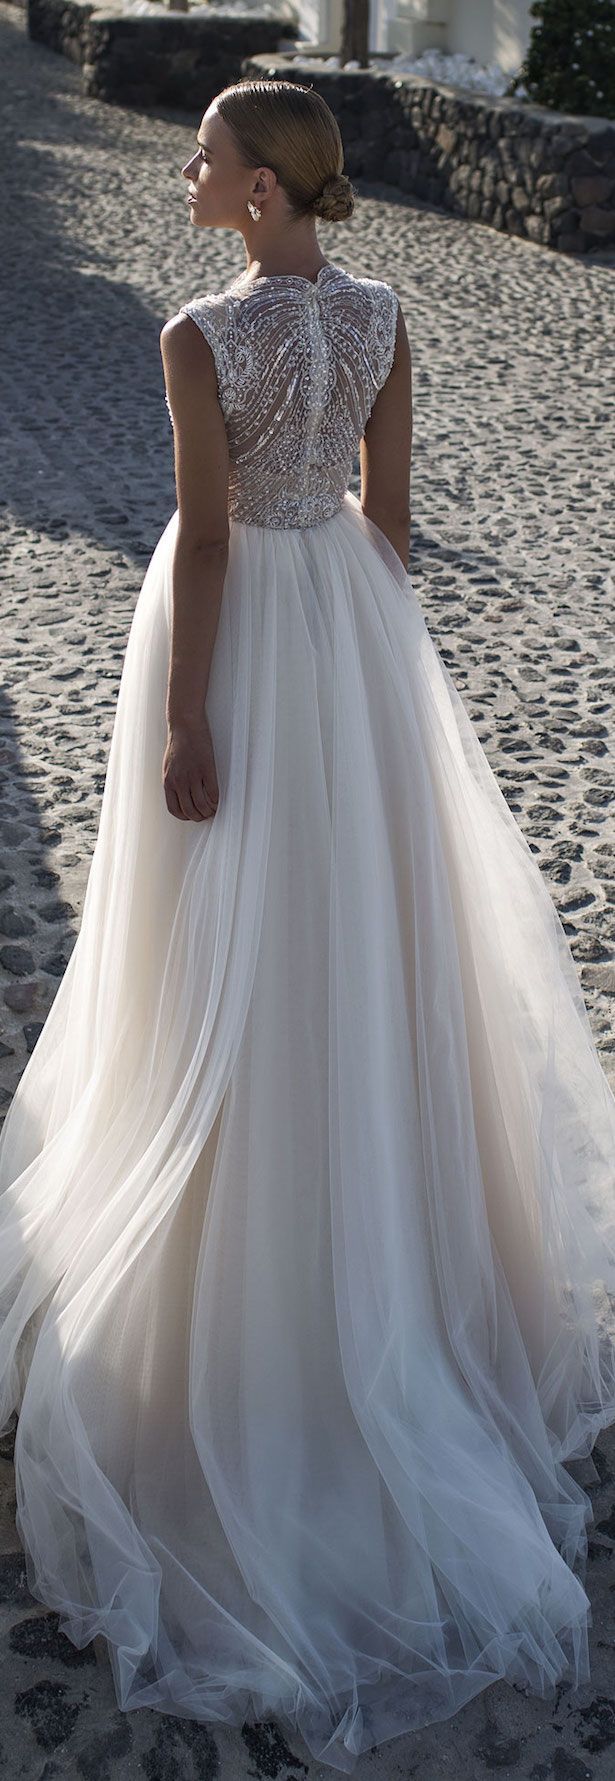 Wedding Dress by Julie Vino – Santorini Collection 2016